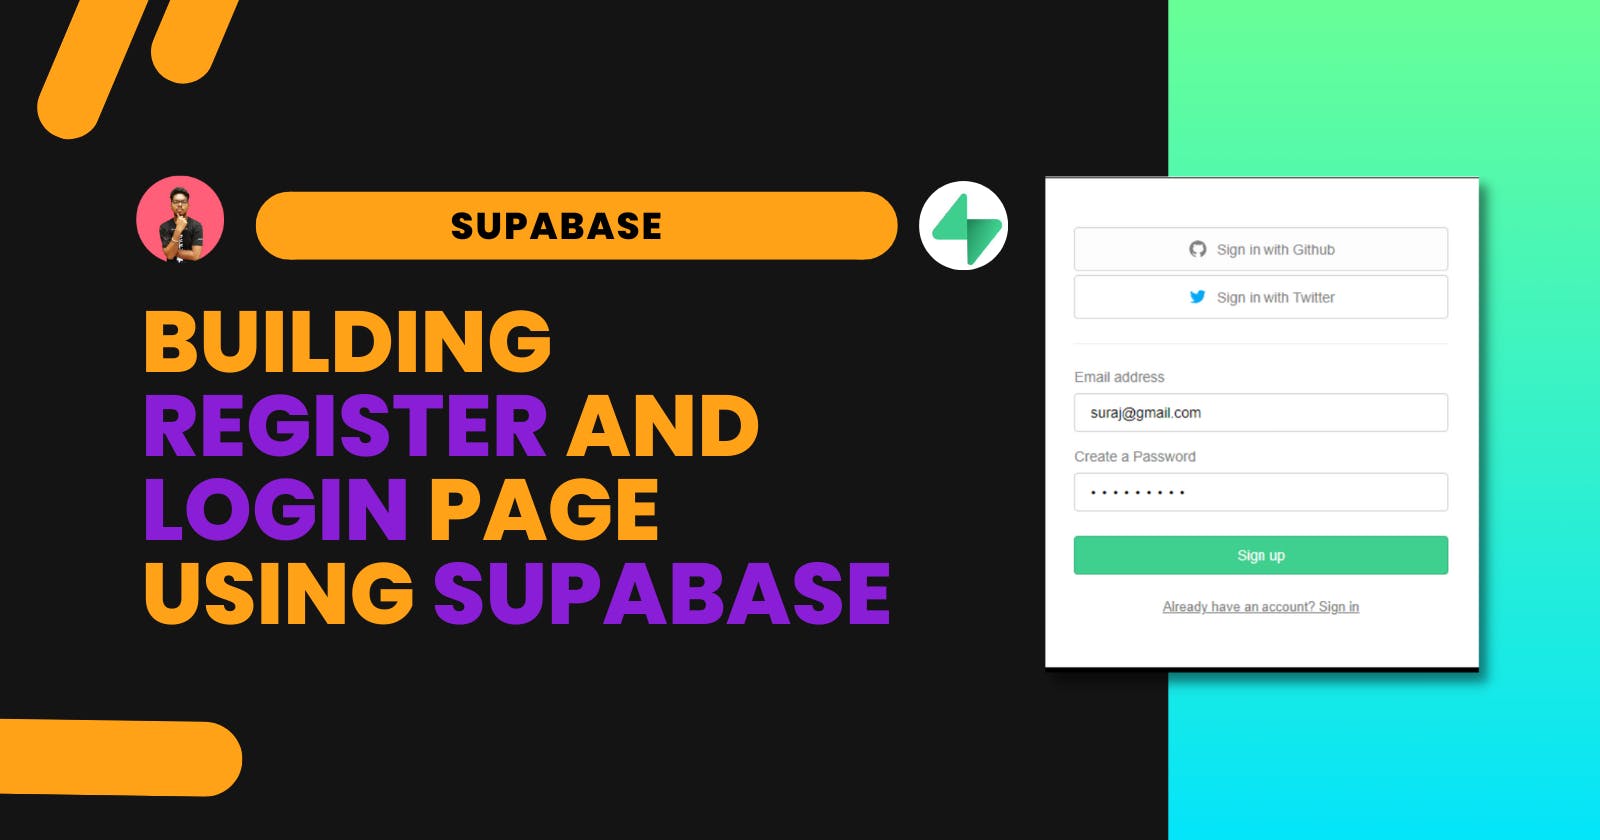 How I build Register and Login page using Supabase